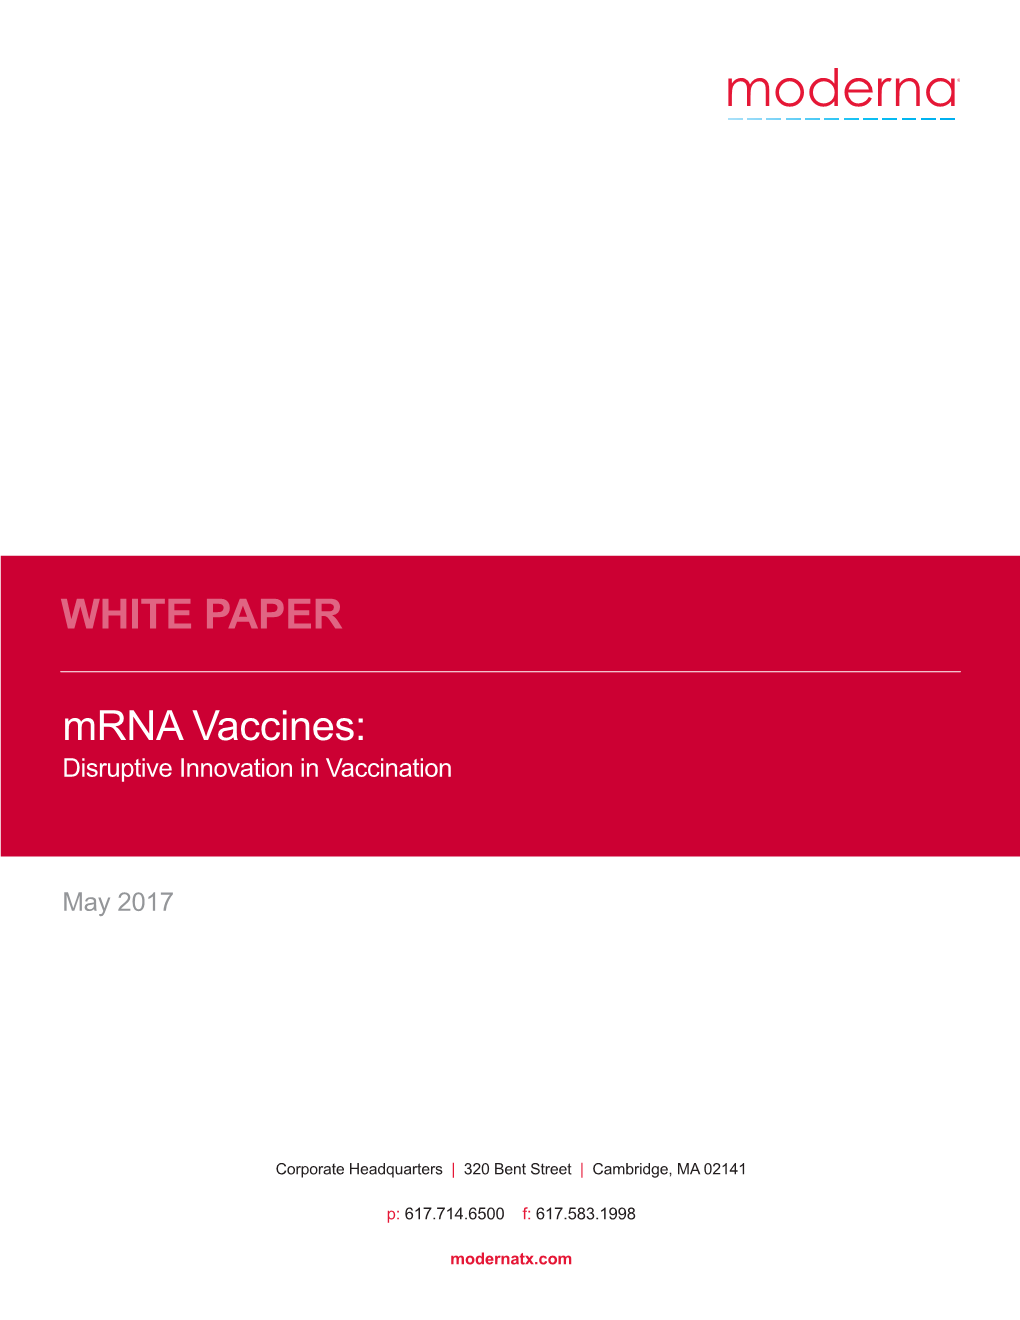 Mrna Vaccines: WHITE PAPER